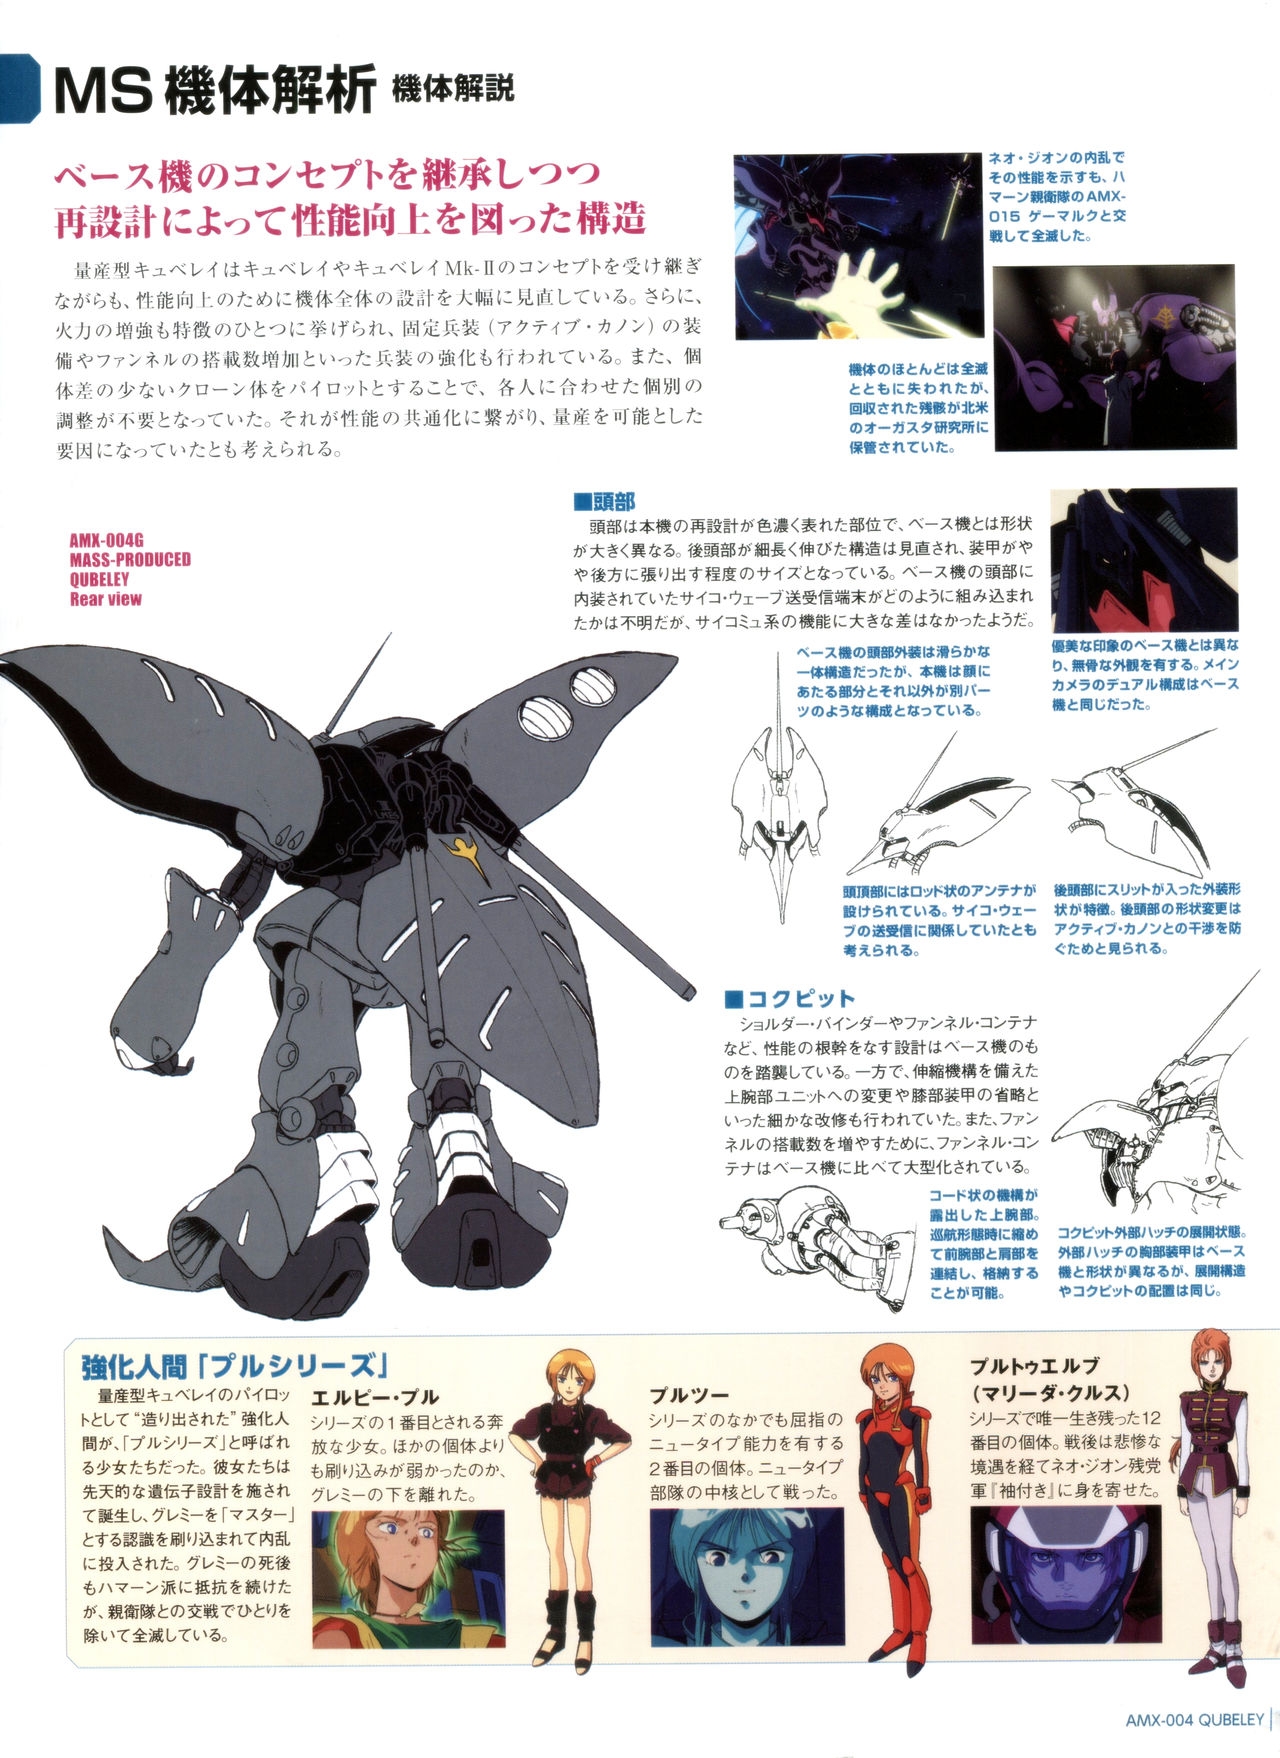 Gundam Mobile Suit Bible 17 12